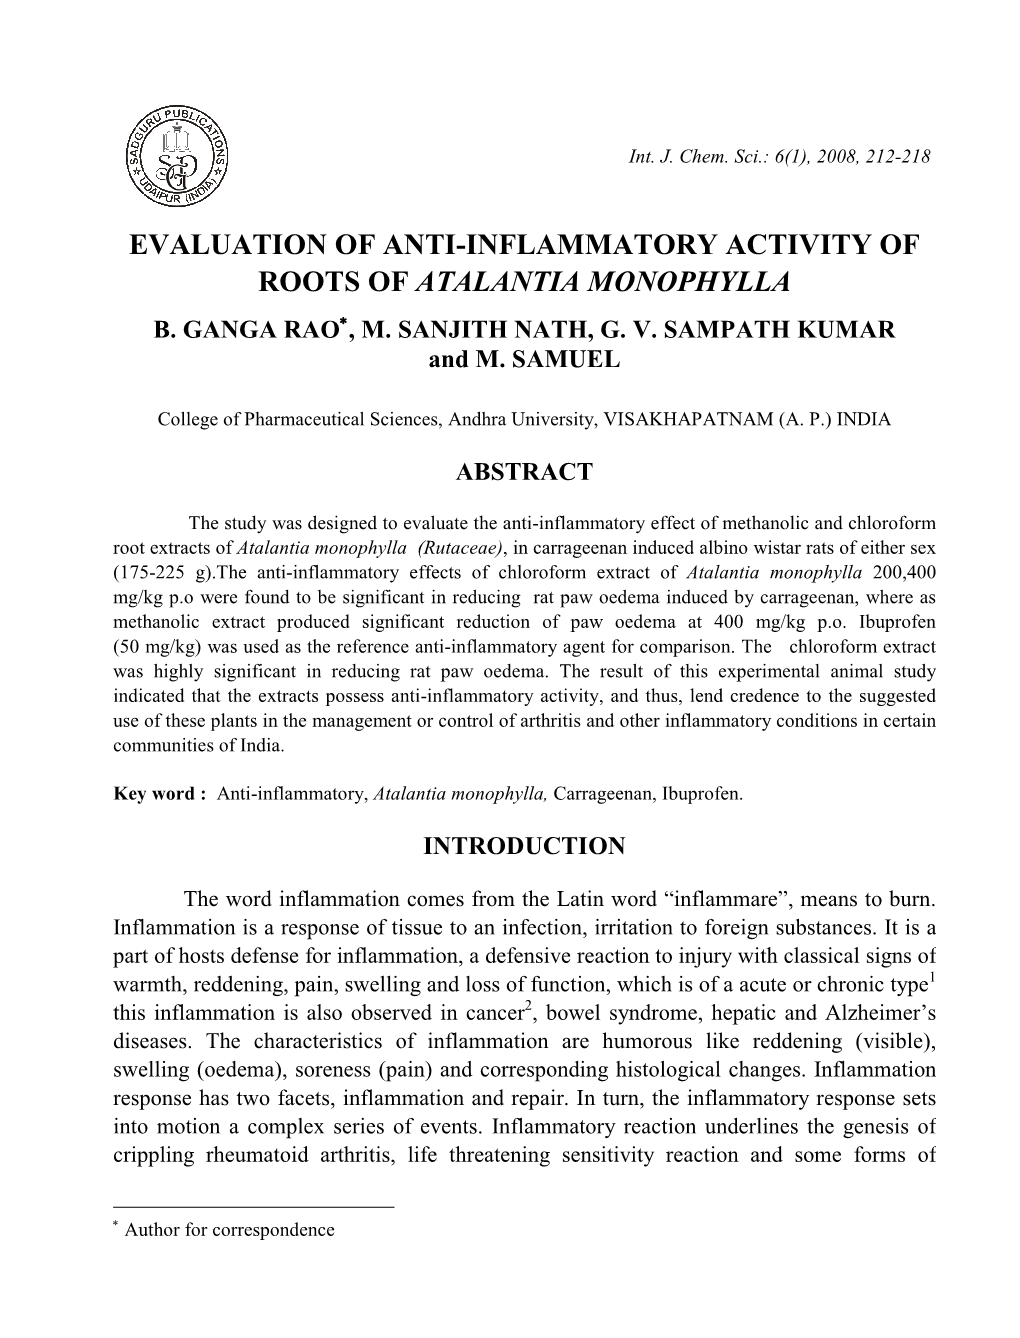 Evaluation of Anti-Inflammatory Activity of Roots of Atalantia Monophylla B